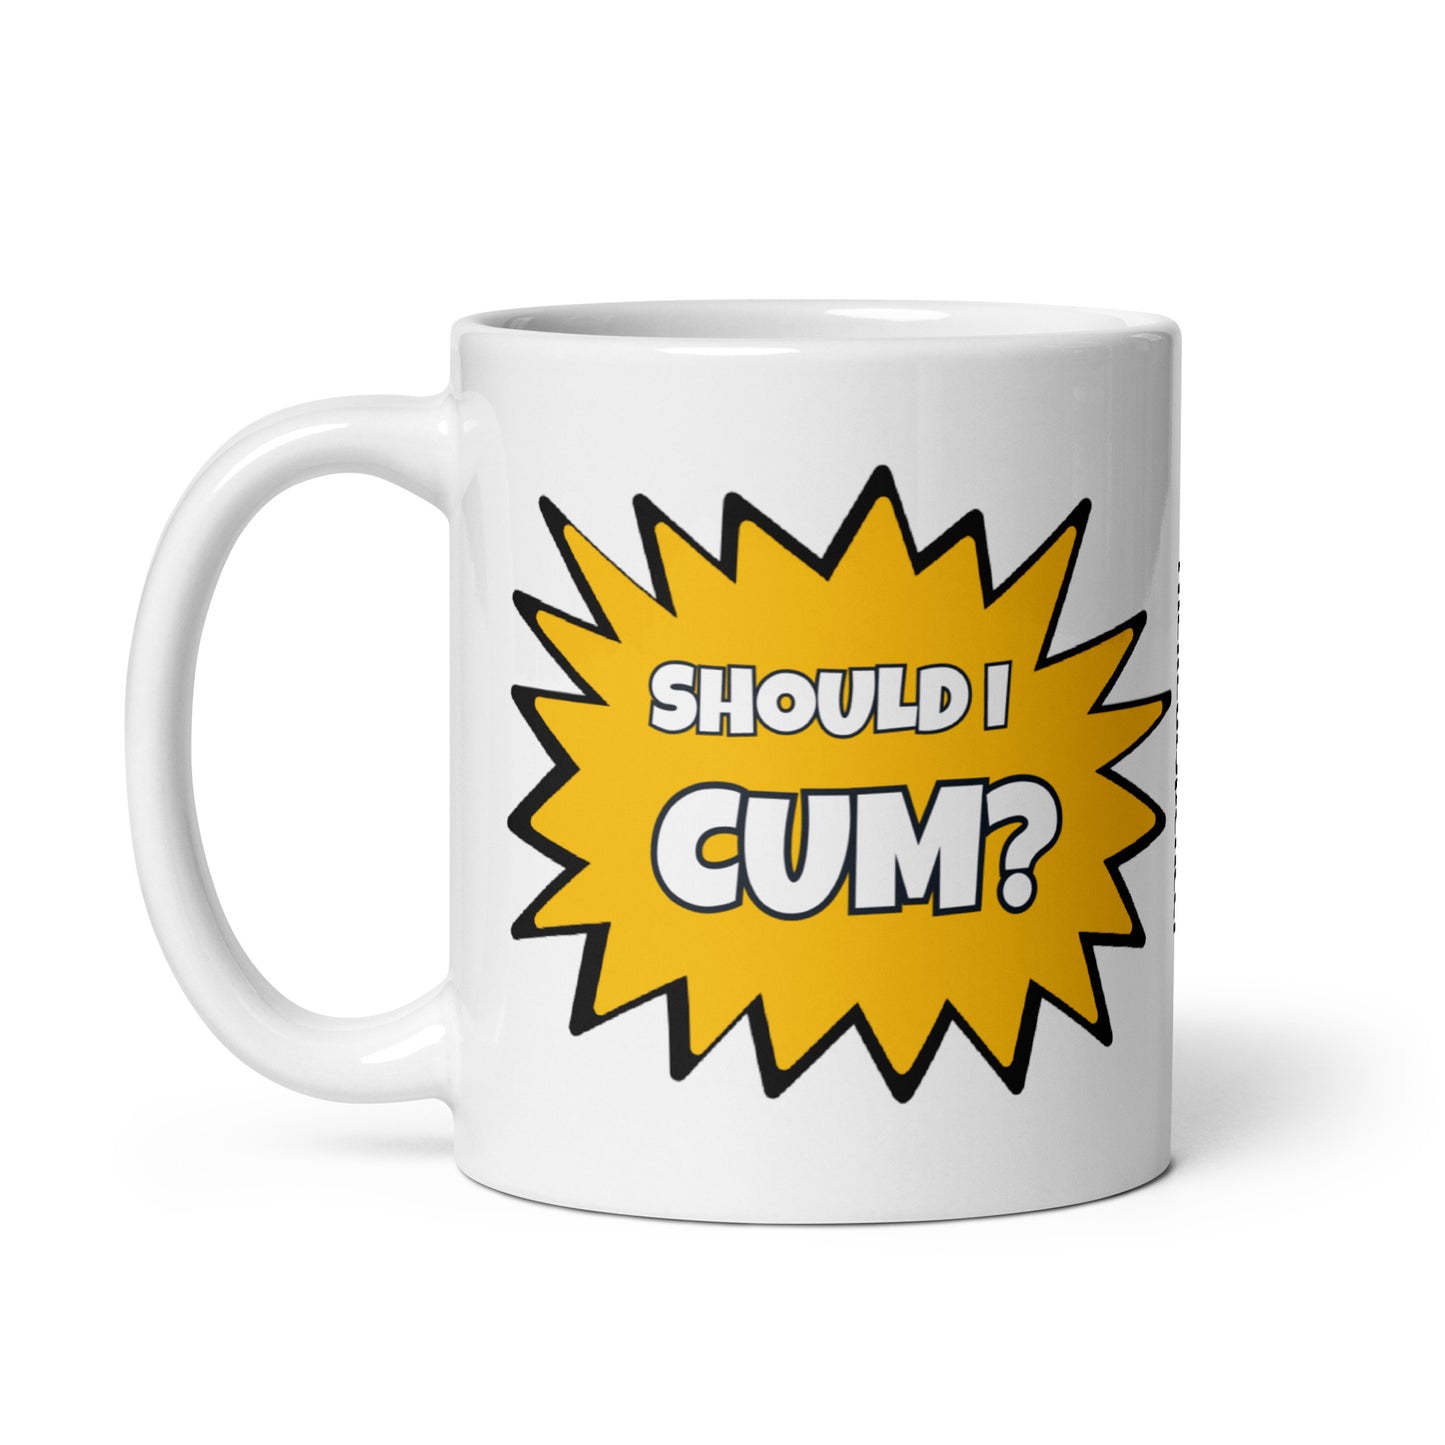 Should I Cum? Mug